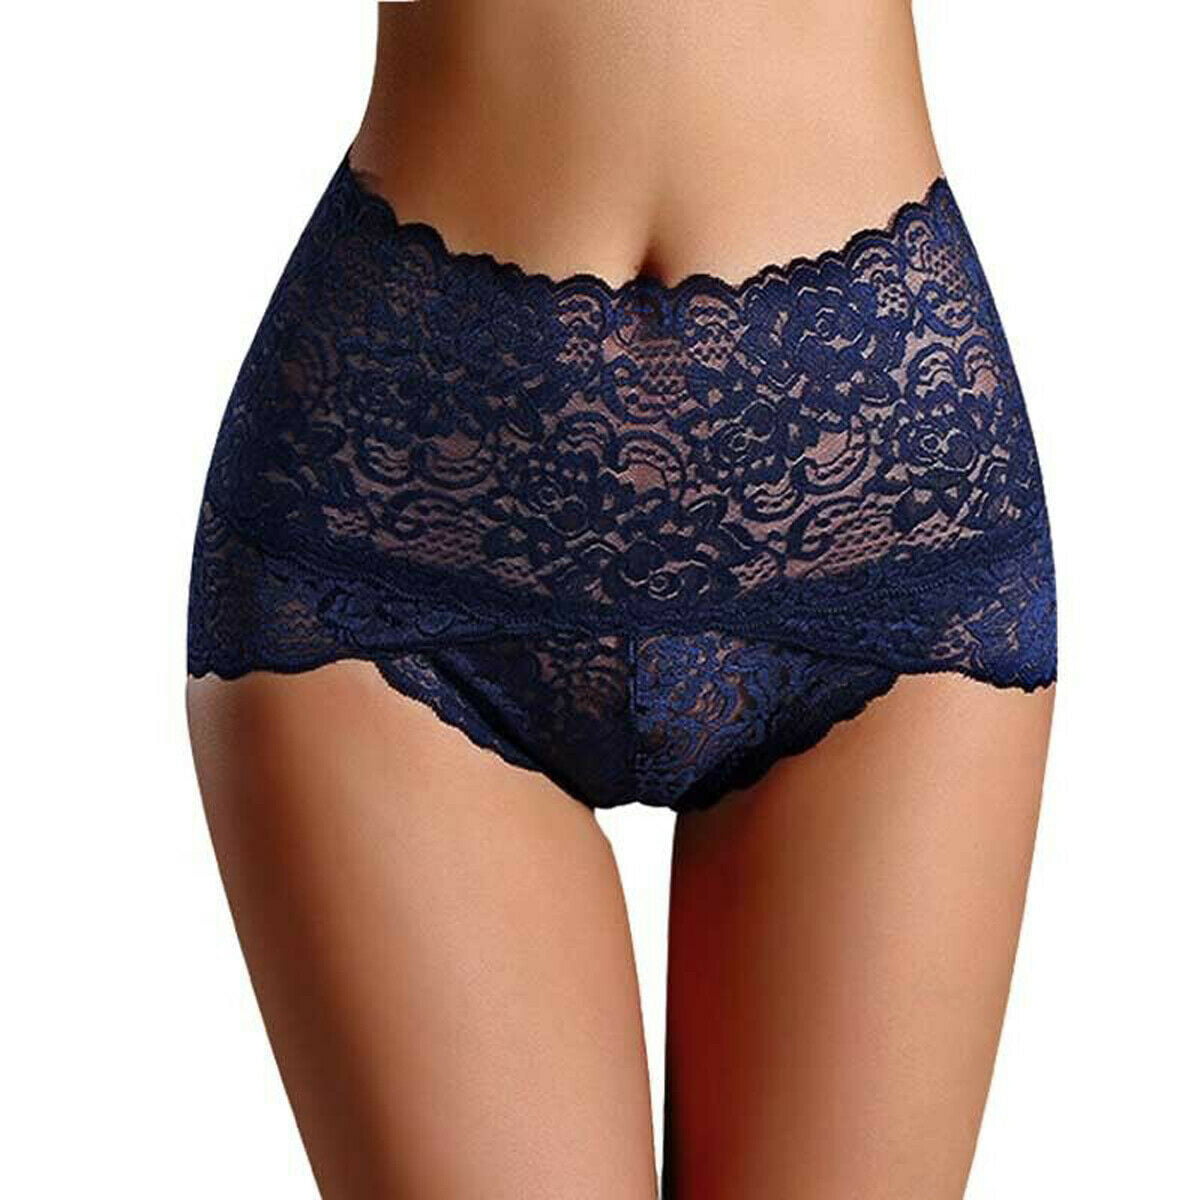 US Women Floral Lace High Cut G-string Panties Thong Underwear Underpants Briefs 